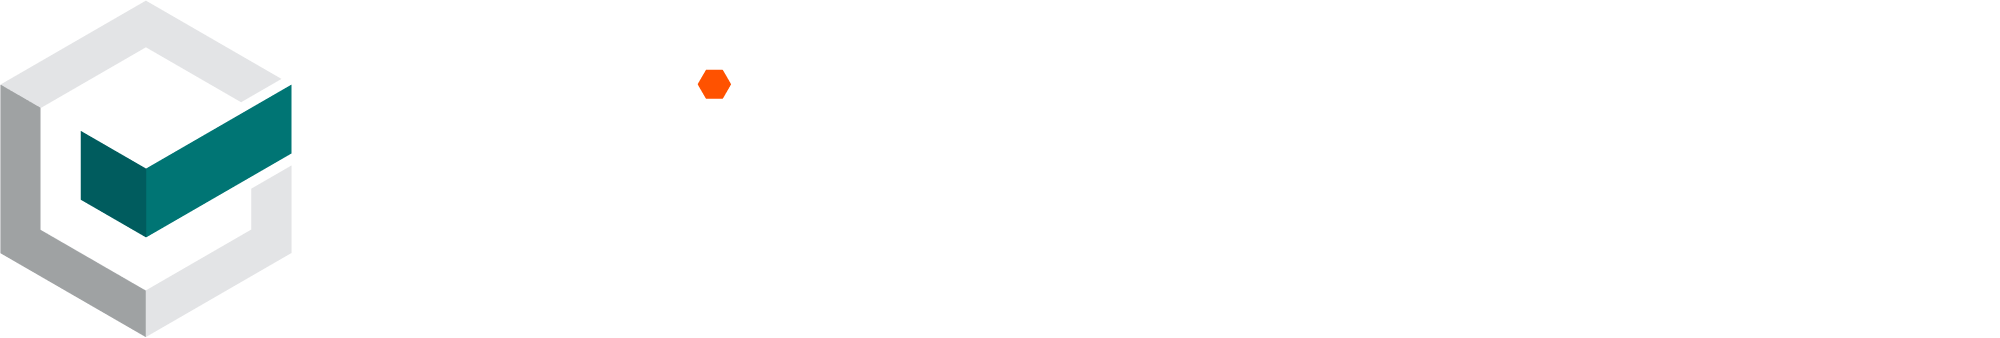 Procore Safety Qualified logo